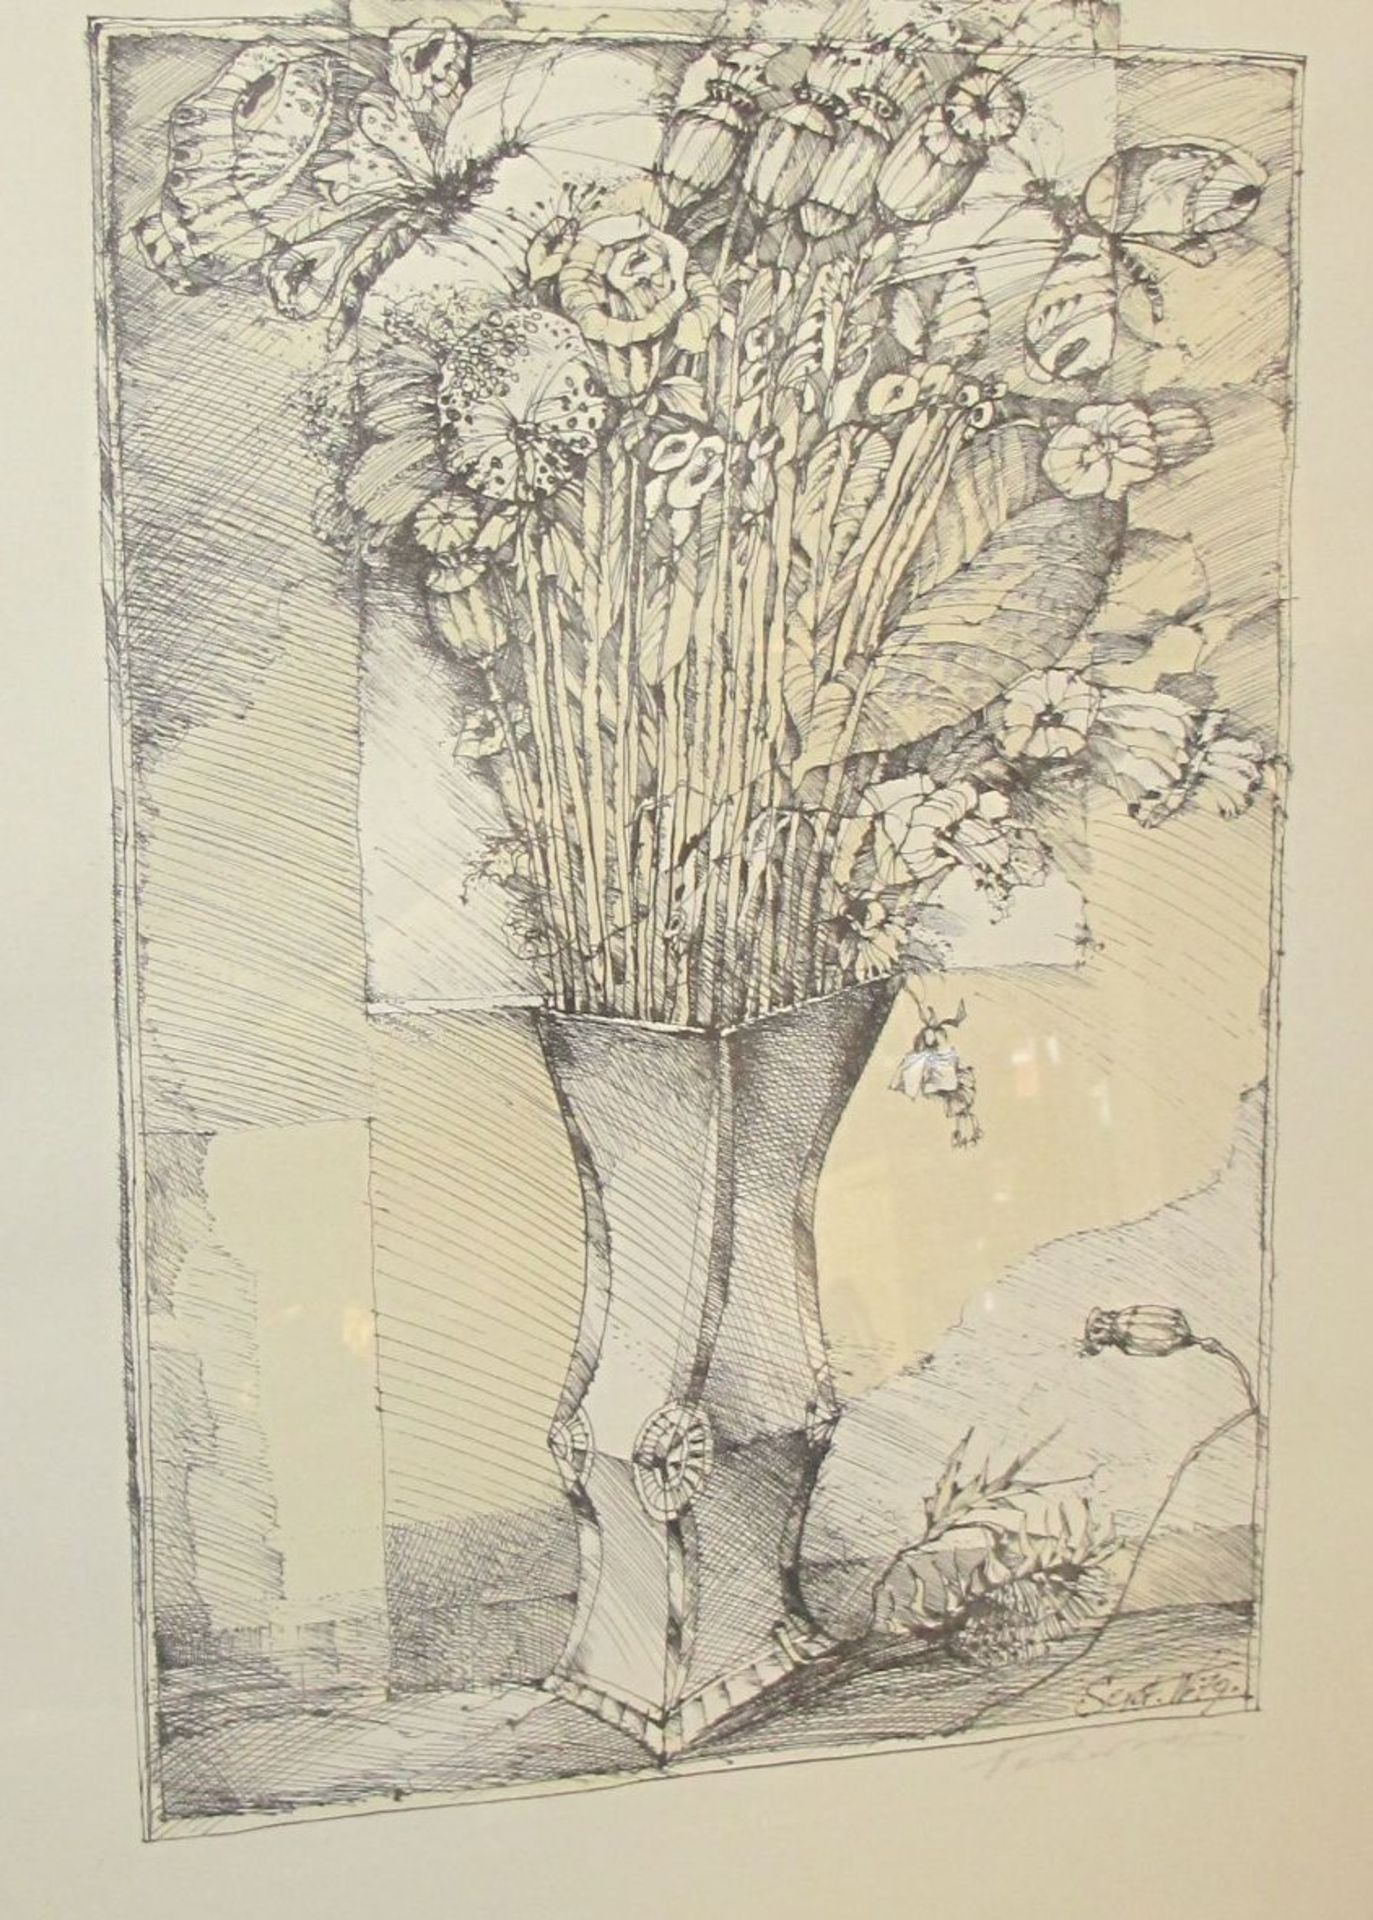 unleserl.signierte Litho "Blumen in Vase", gerahmt/Glas, RG 72 x 51cm